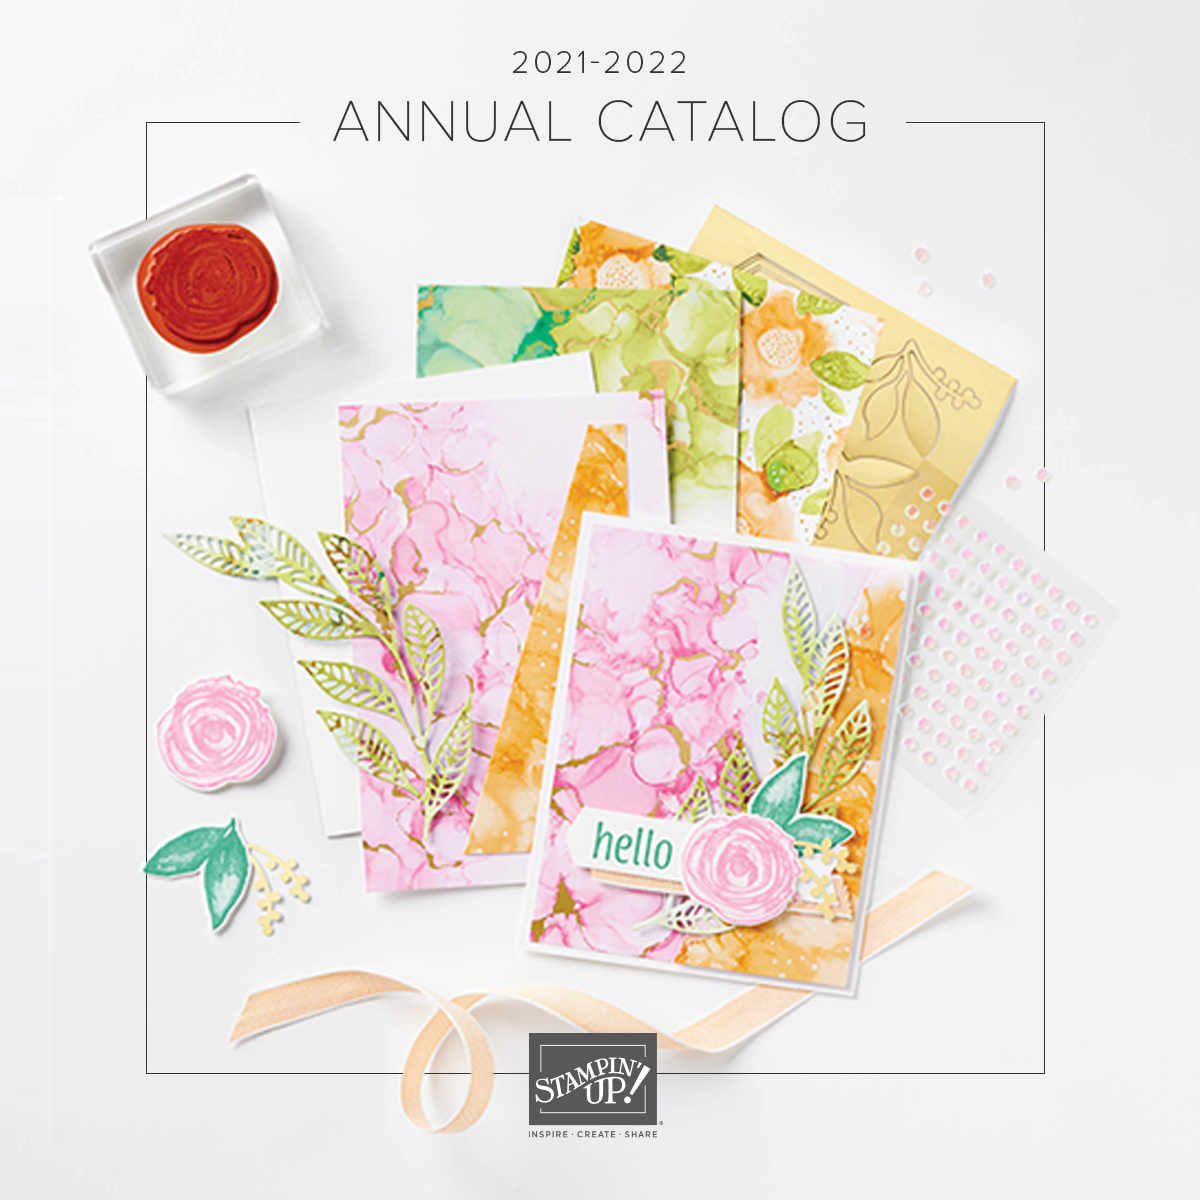 2021-2022 annual stampin up catalog sneak peek cover sq